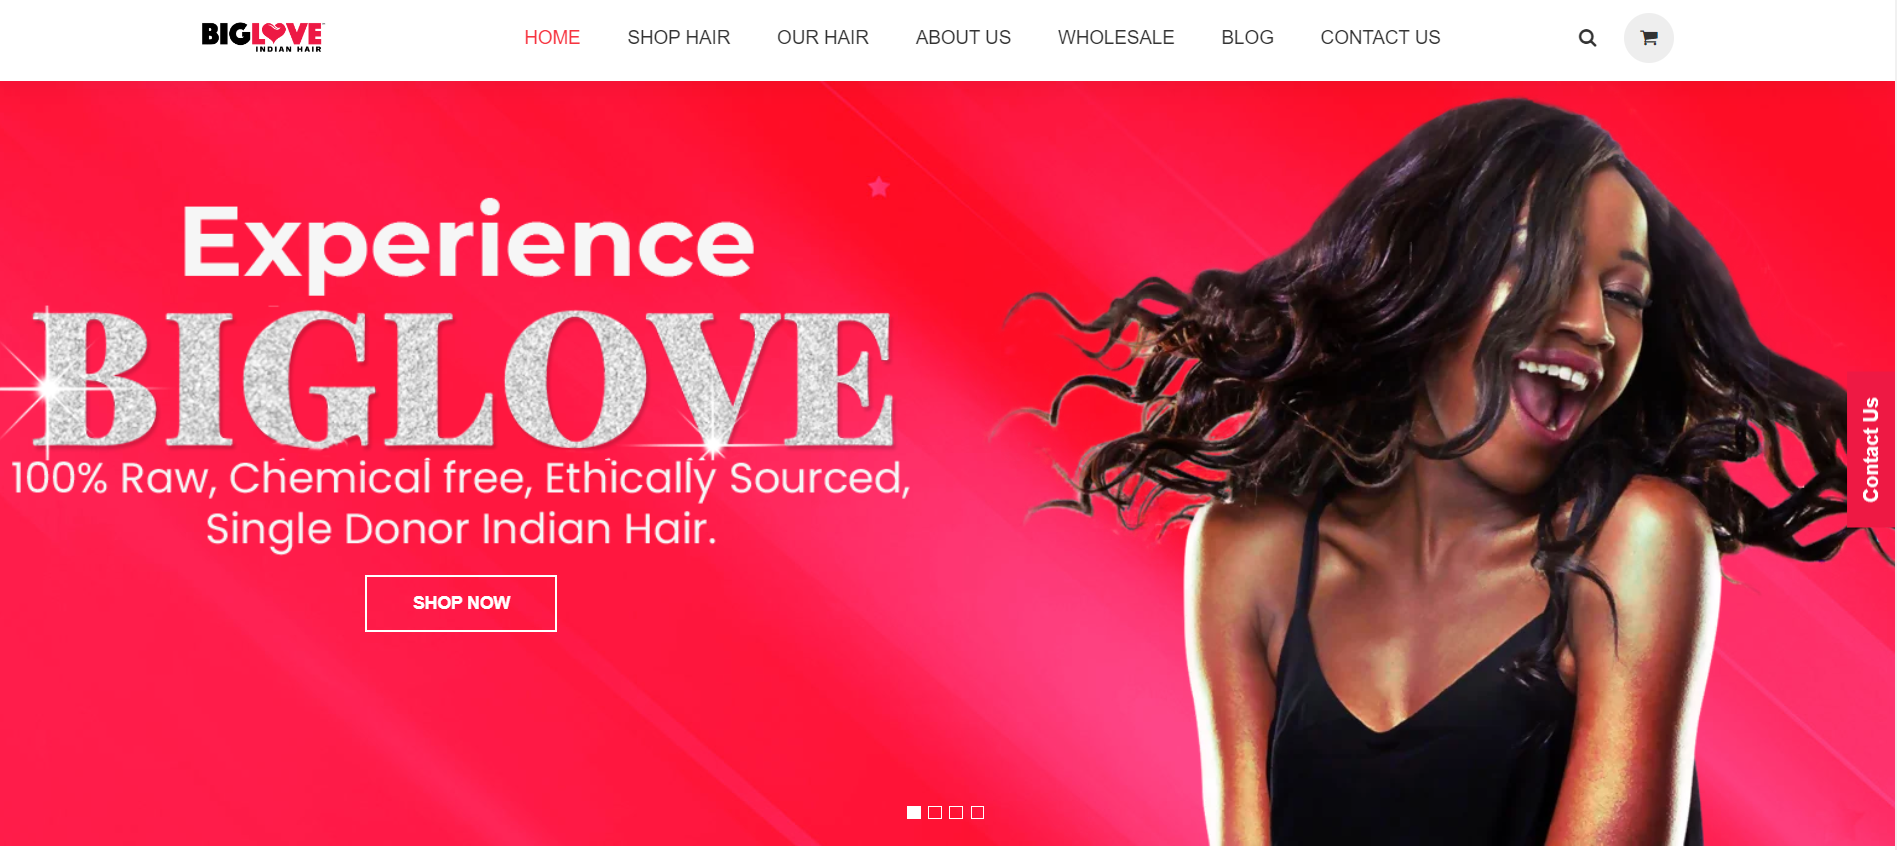 Website Of Big Love India